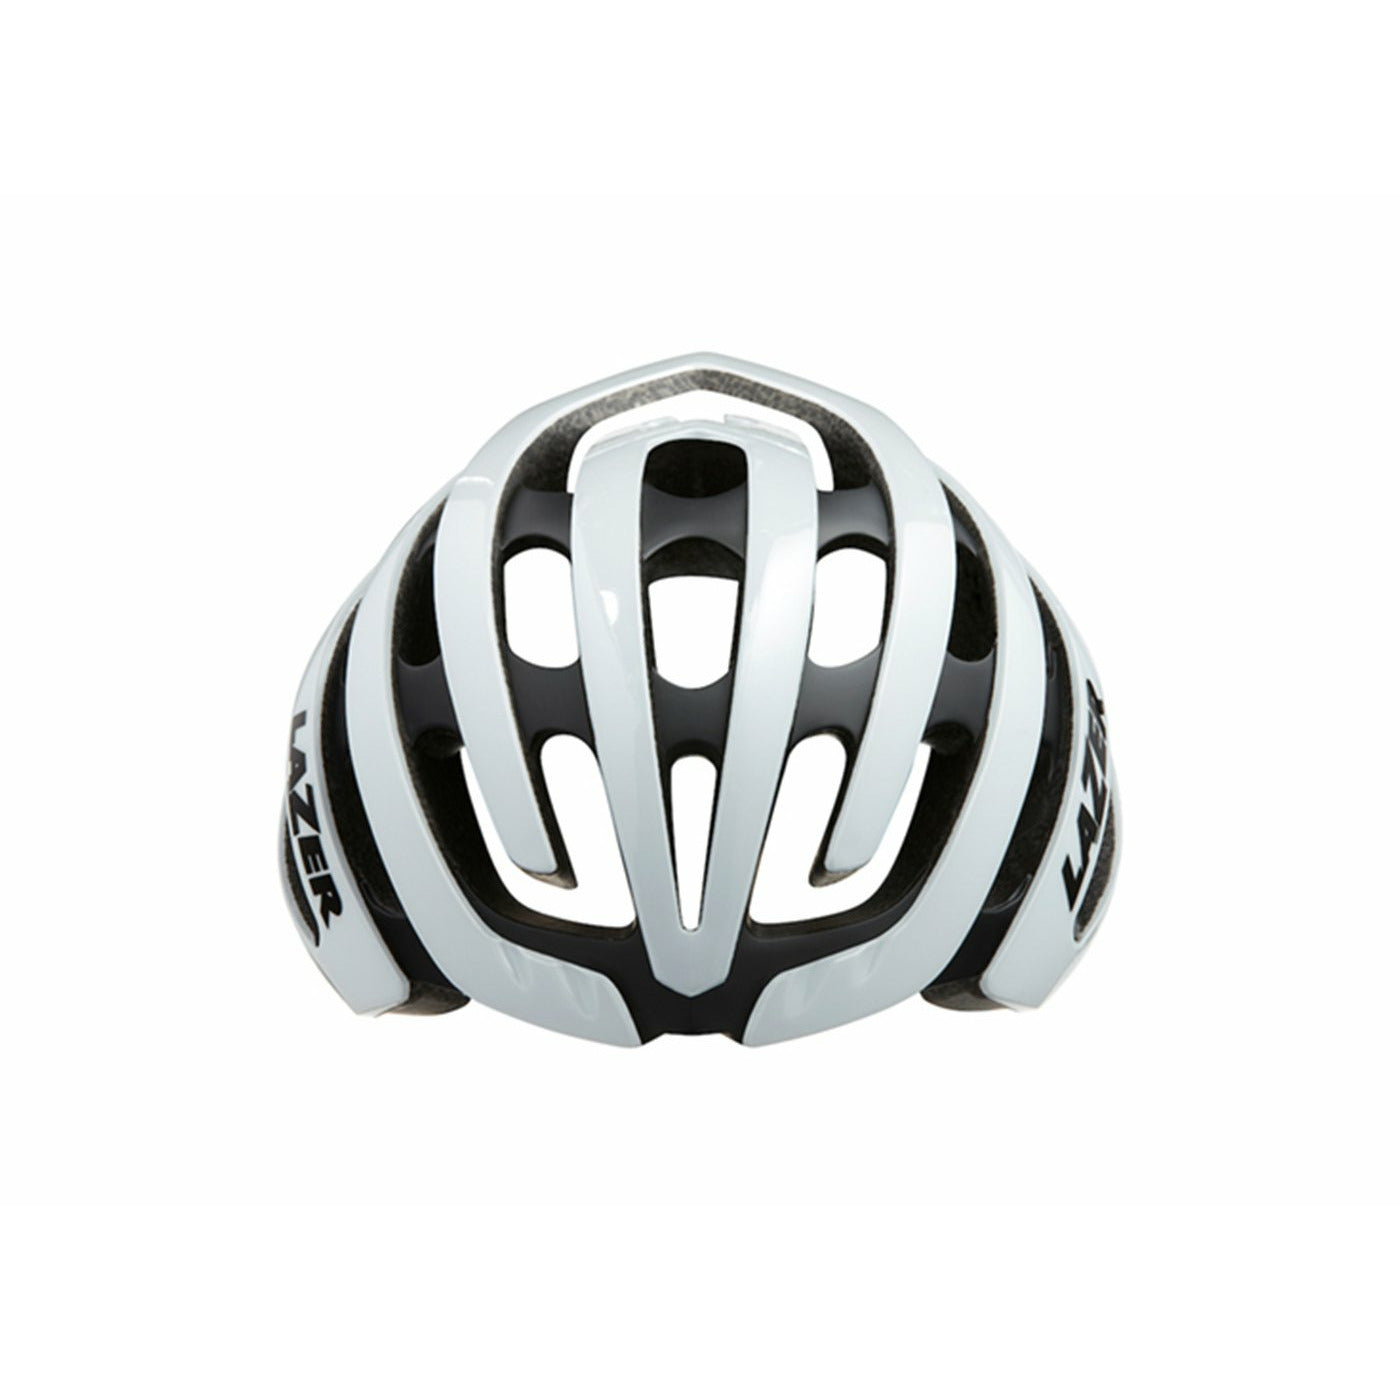 Lazer Z1 Road Bike Helmet